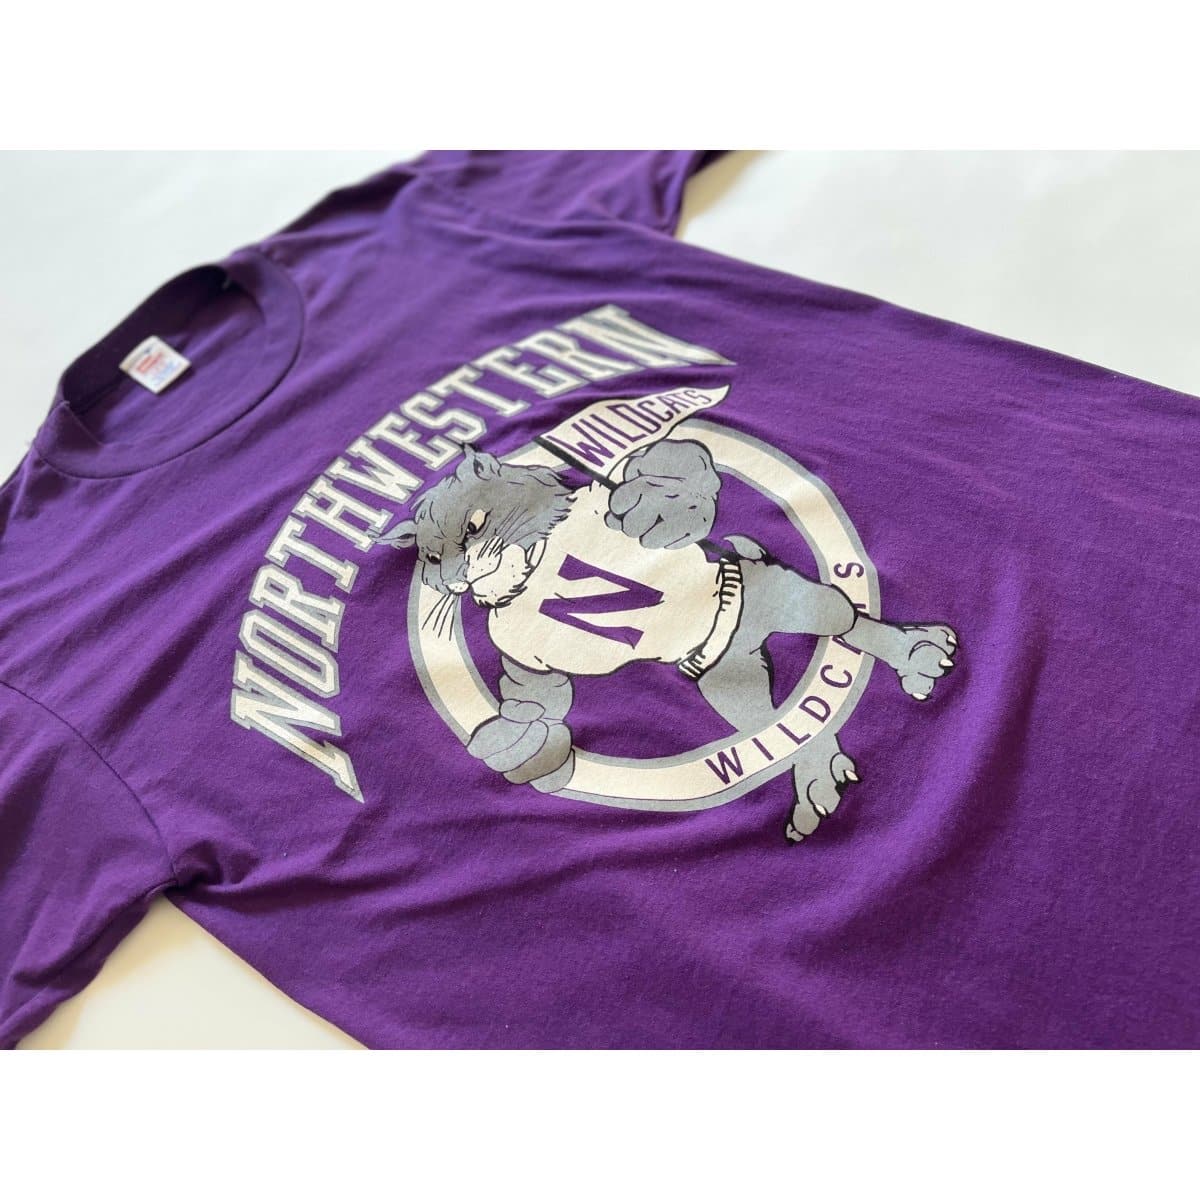 Gameday Grails T-Shirt Large Vintage Northwestern Wildcats T-Shirt